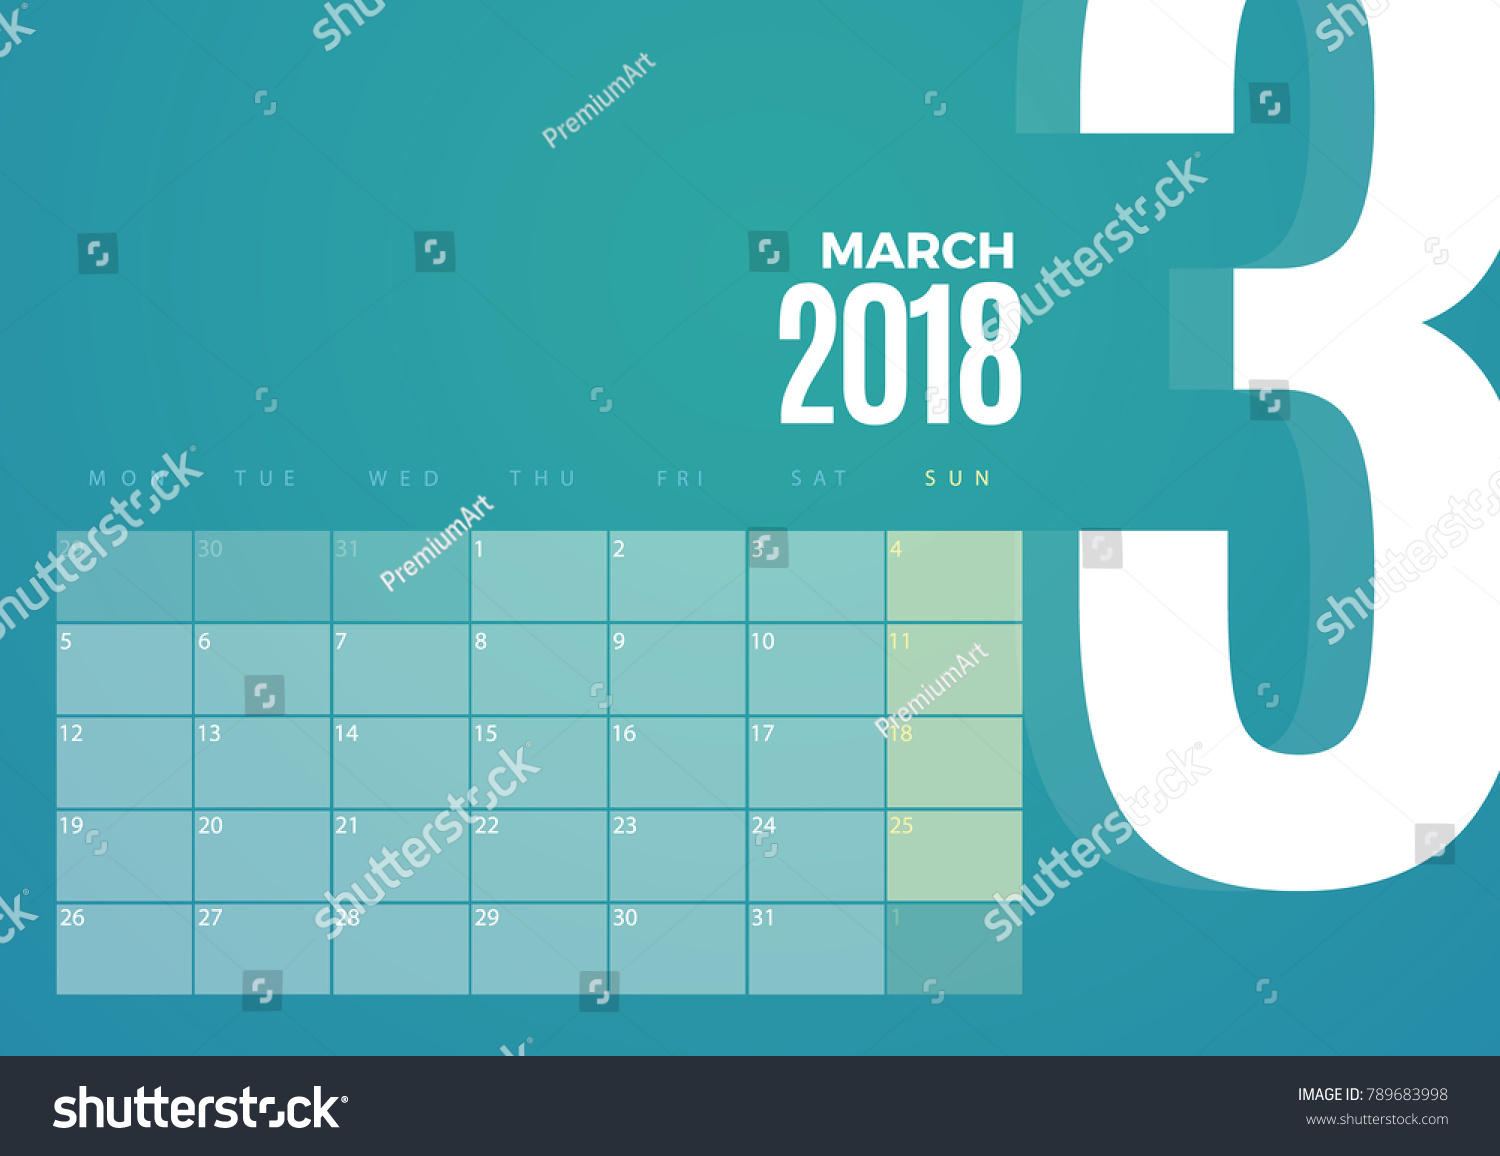 desk-march-2018-calendar-vector-schedule-stock-vector-royalty-free